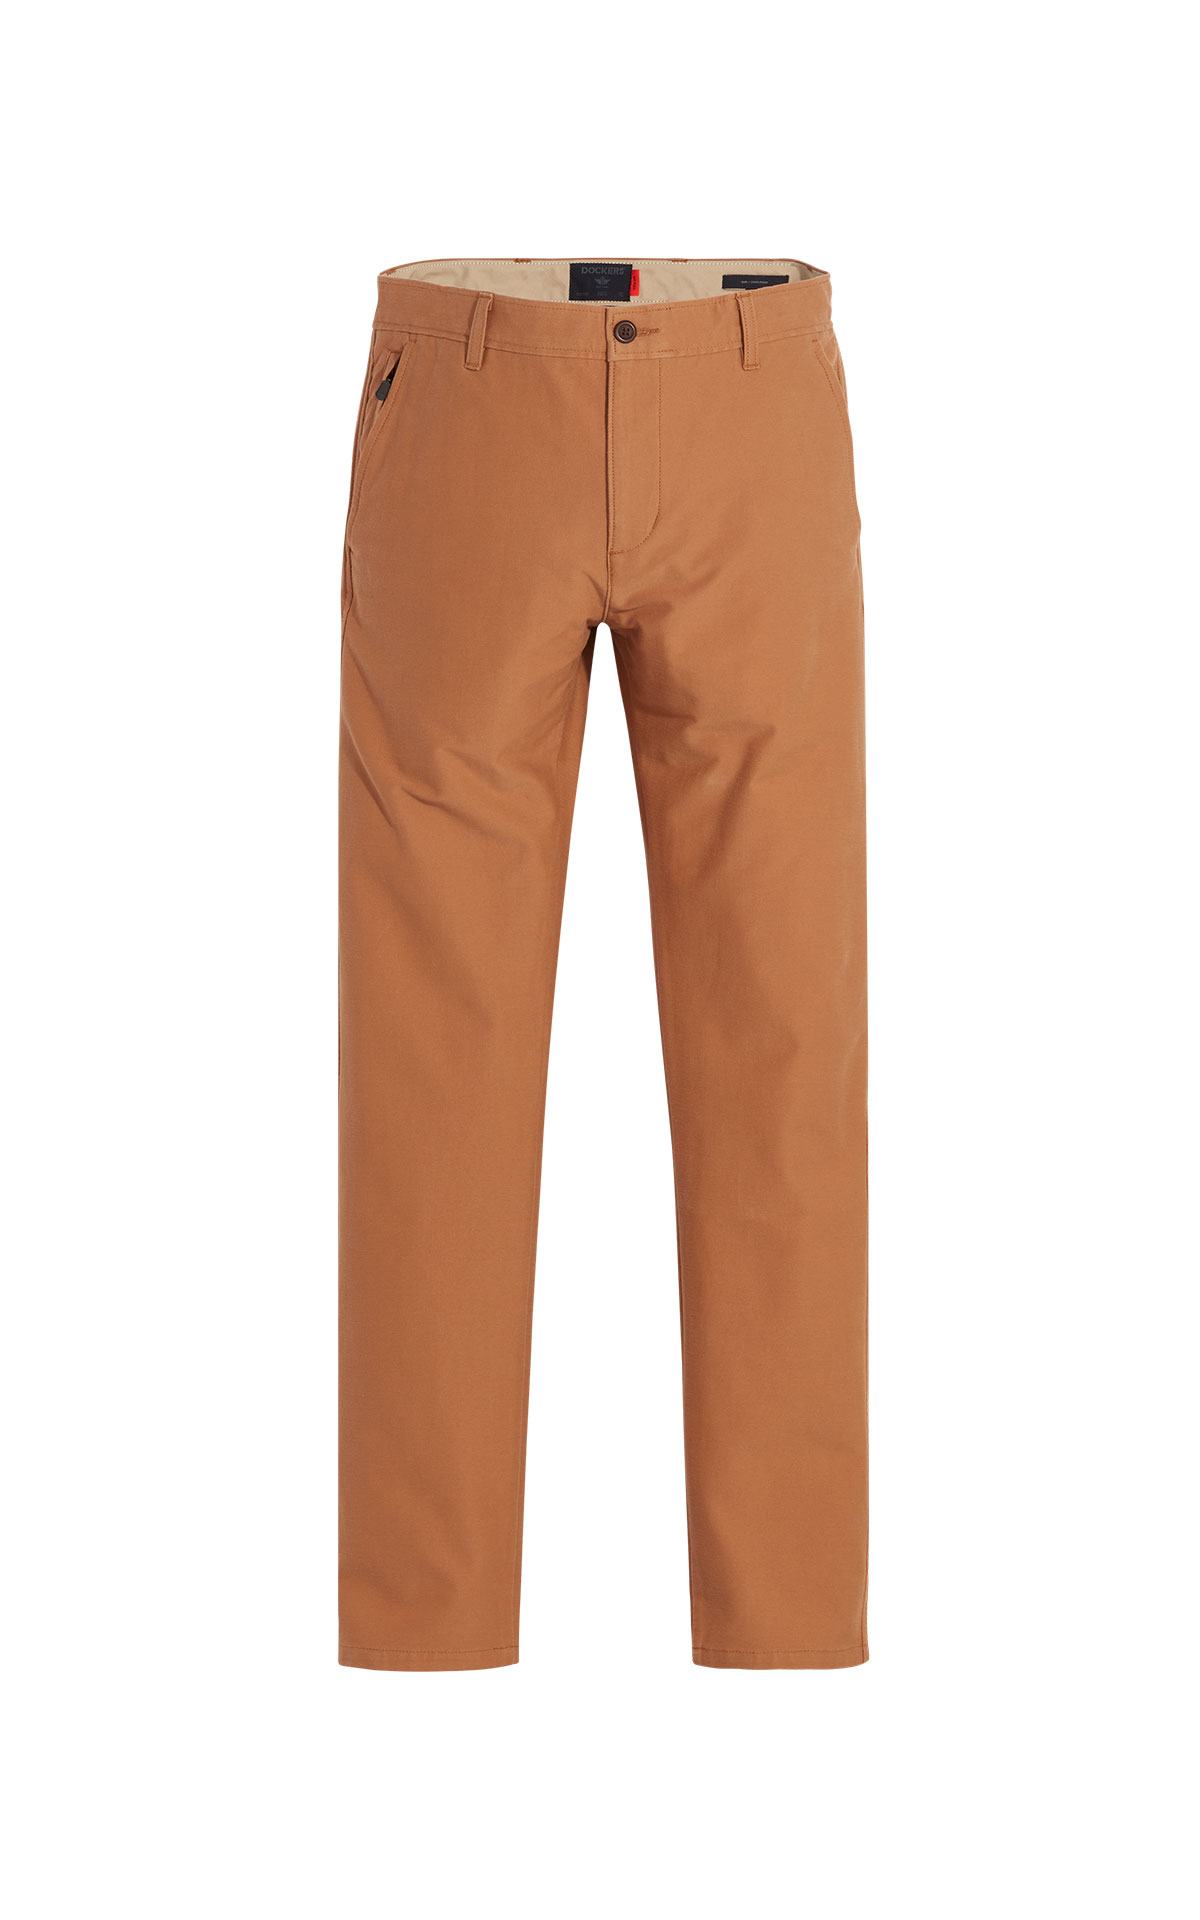 Orange pants Dockers